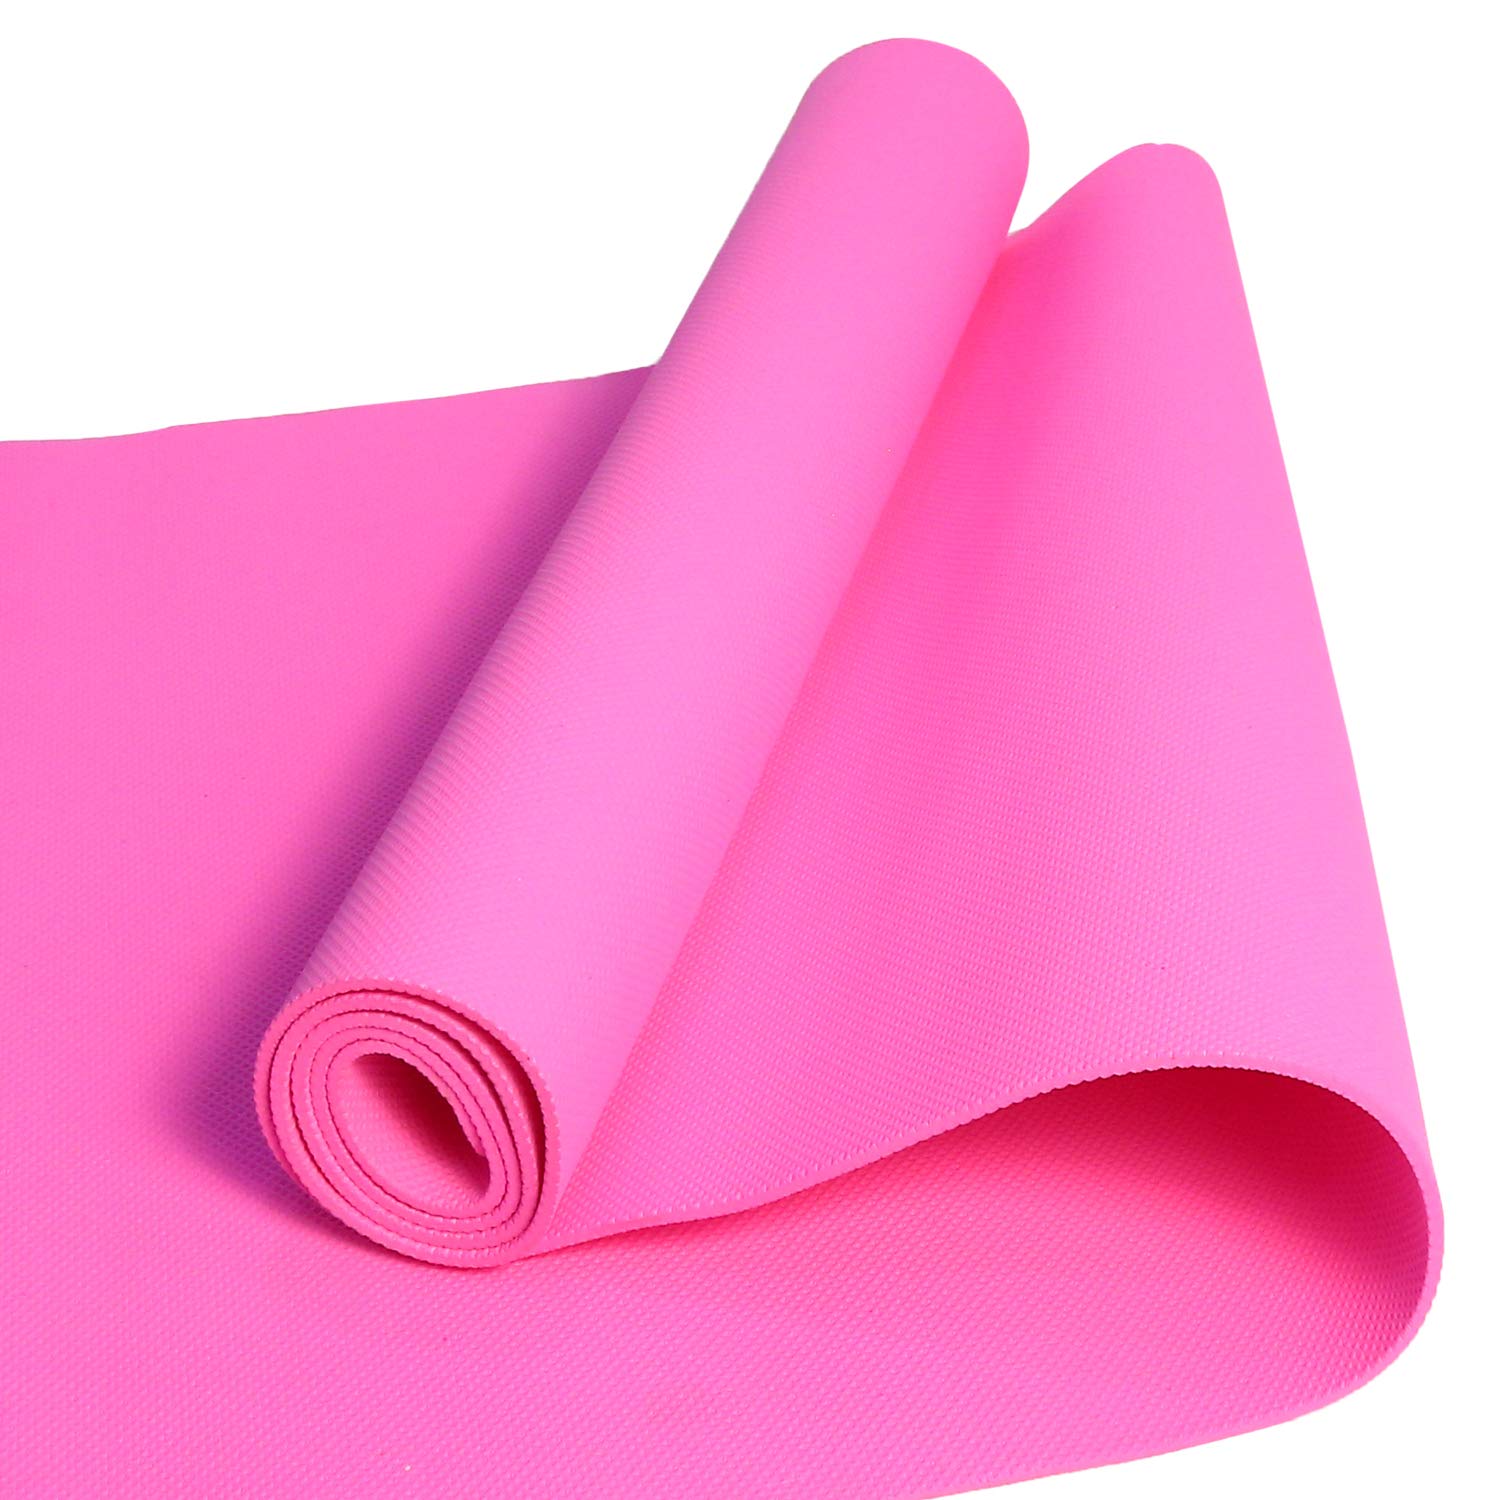 USI Universal Yoga Mat, 60cmx170cm Yoga Mat, Dense Foam, Non-Slip, Durable, Light Weight (No return no exchange)